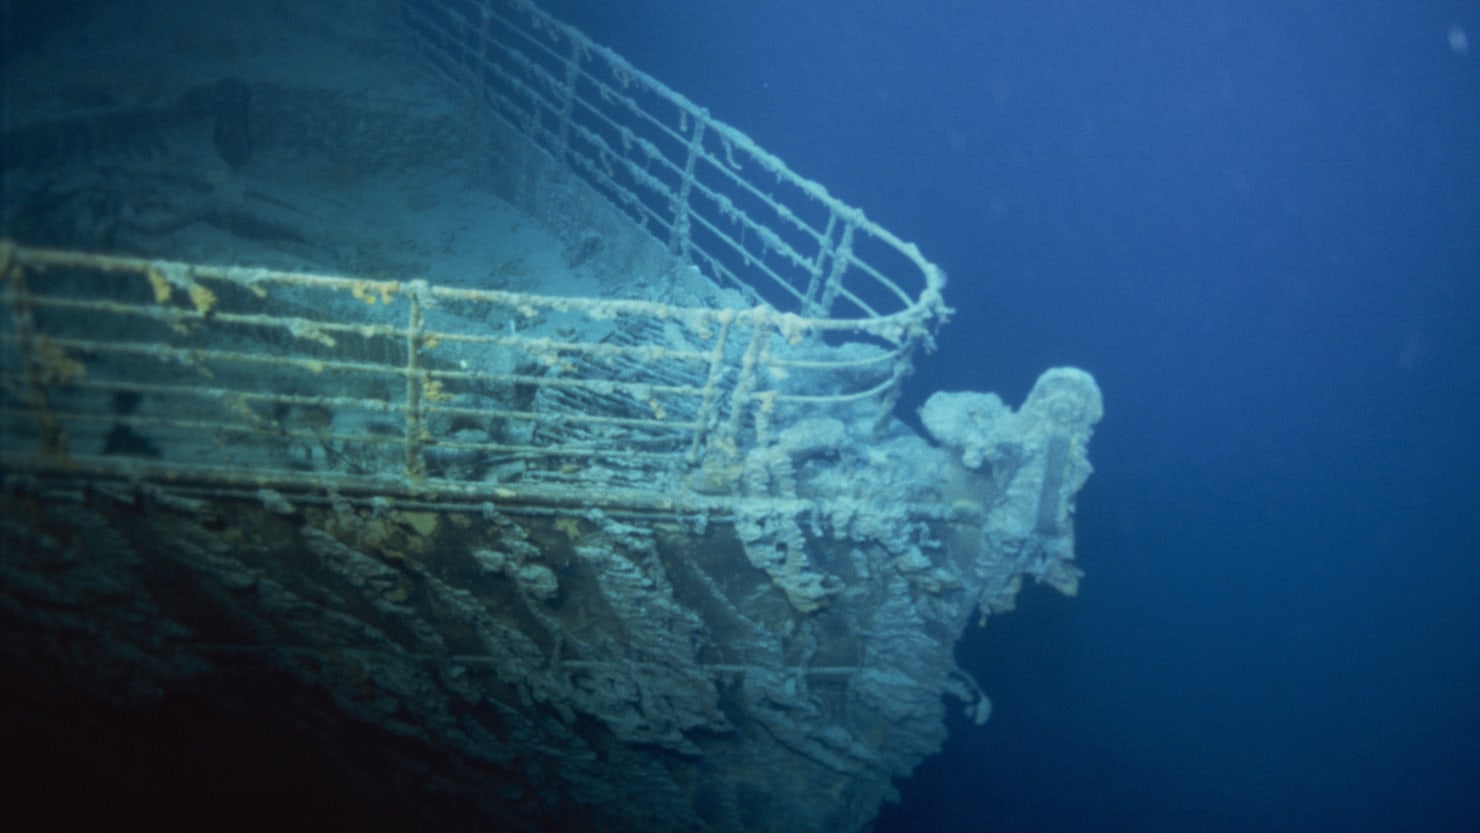 missing tourist vessel near titanic